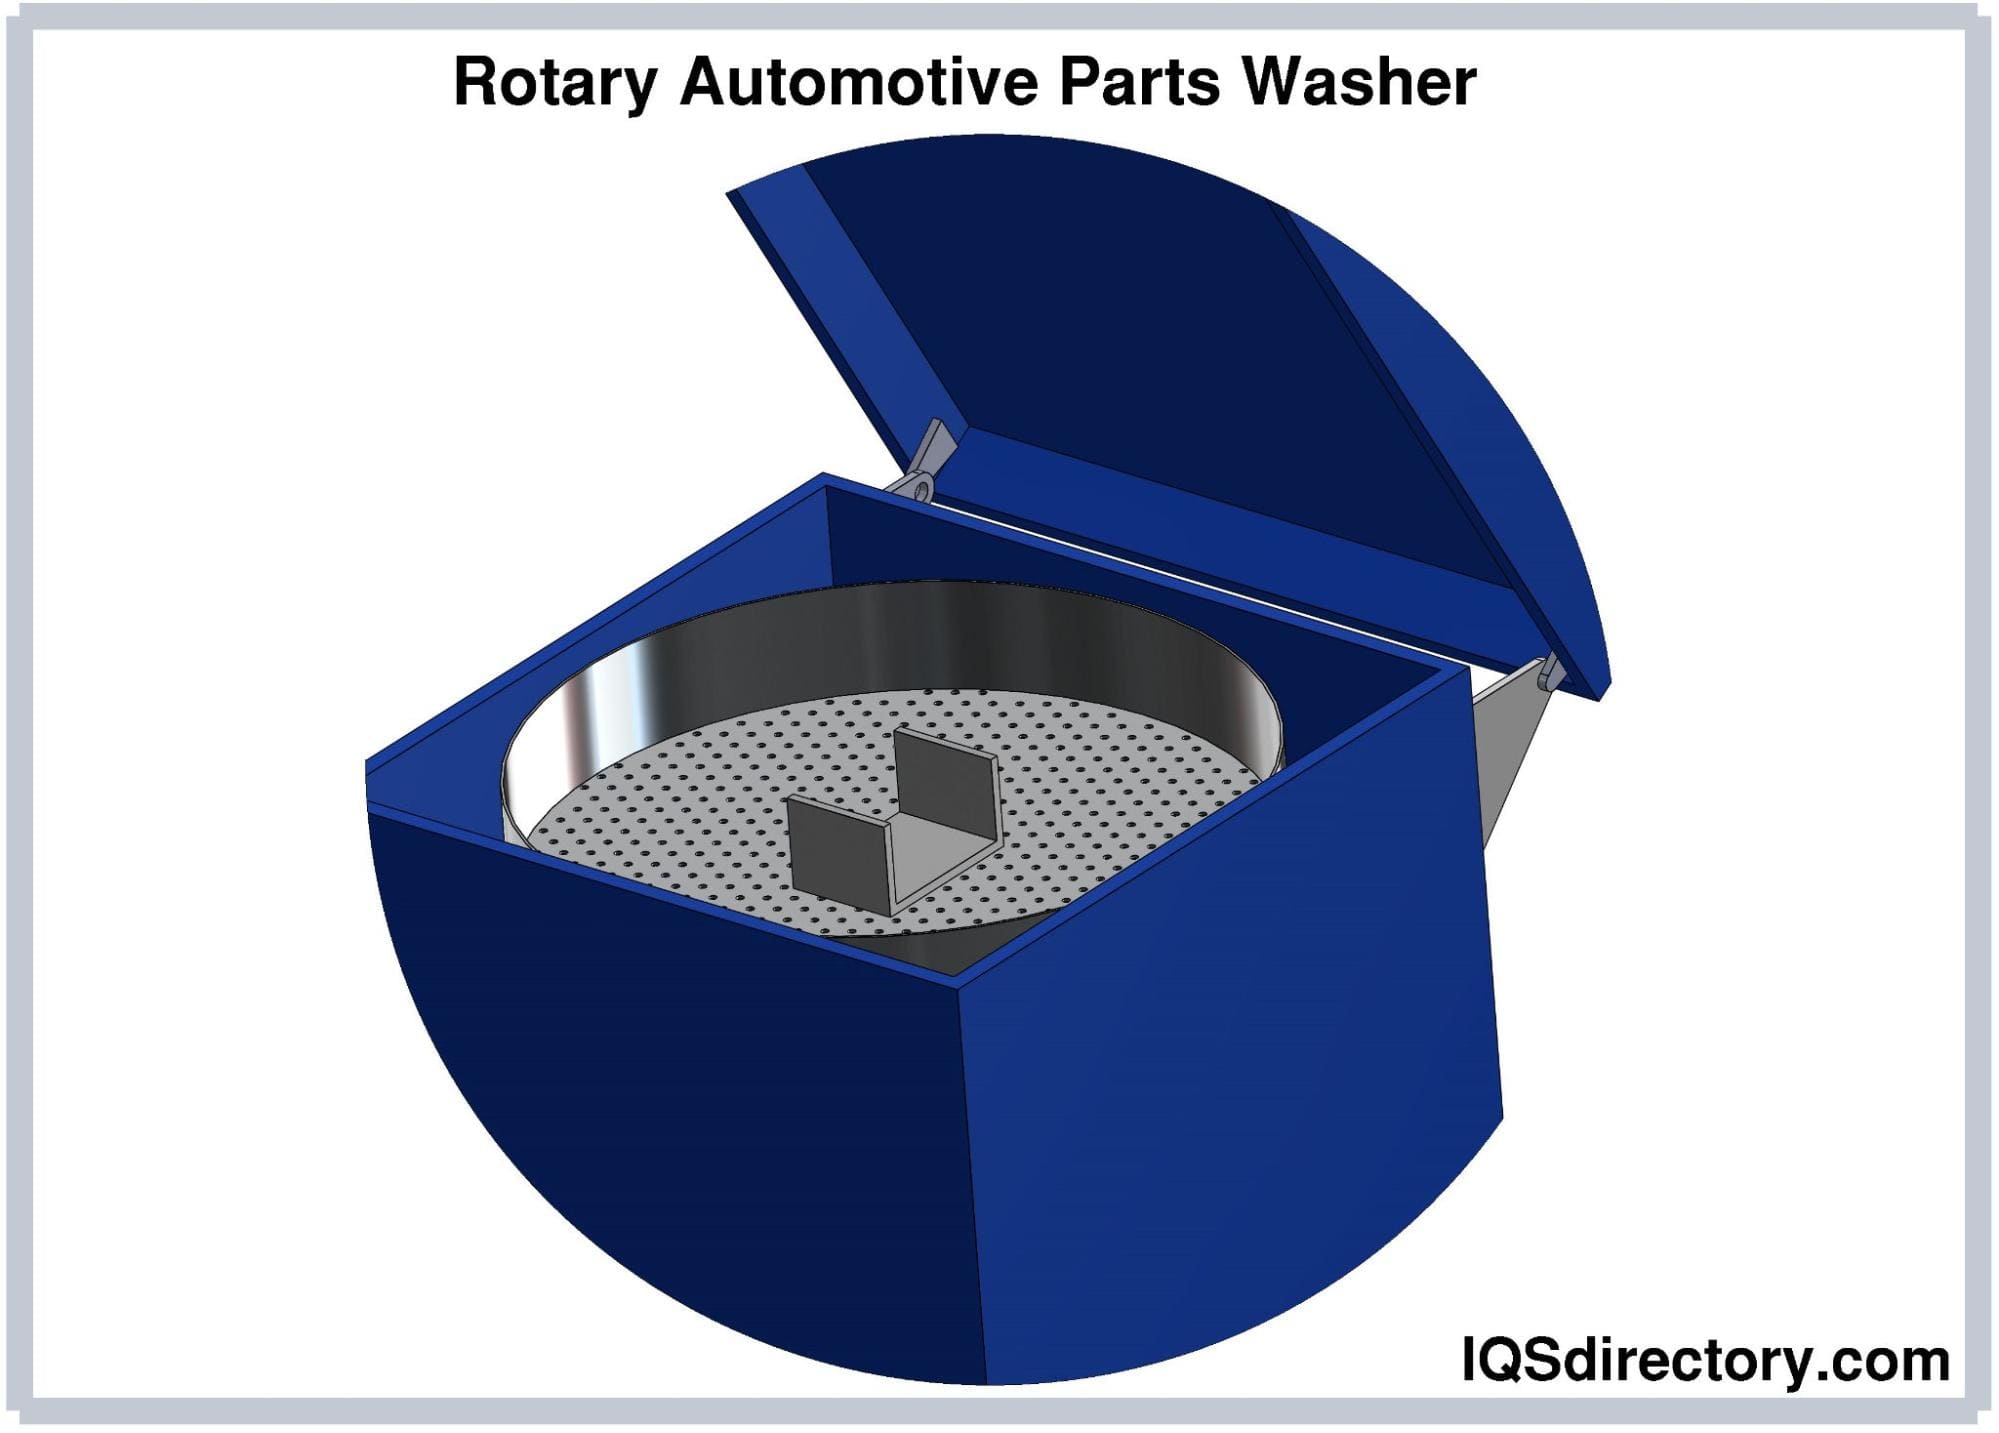 Rotary Automotive Parts Washer